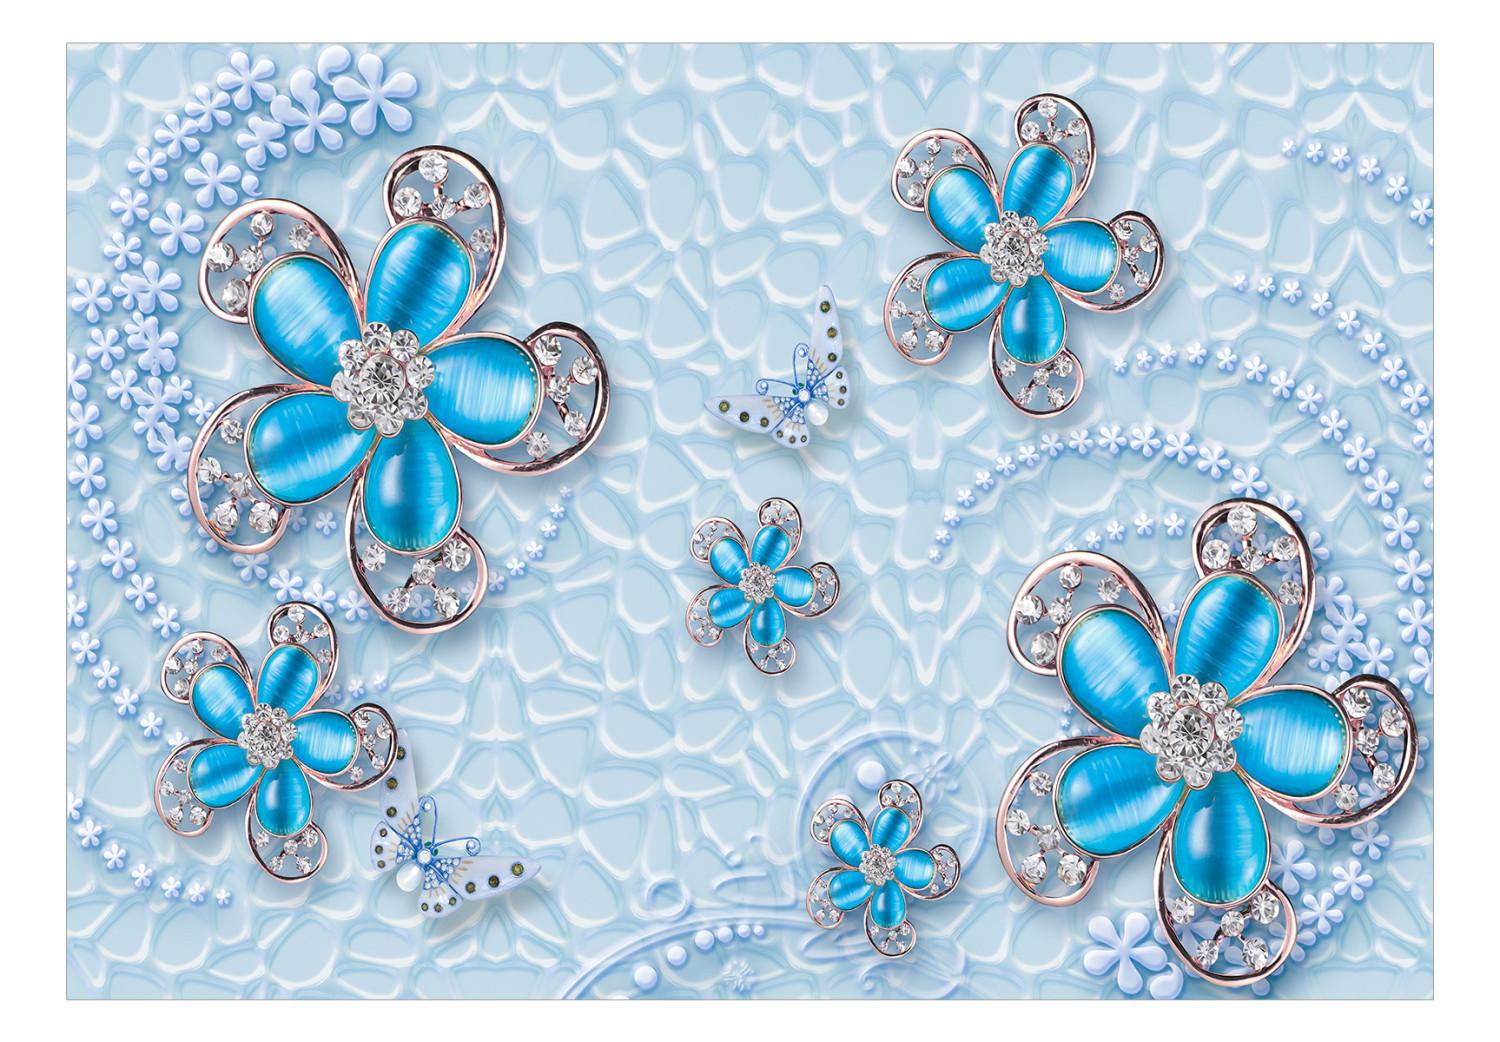 Fotomural Joyas en flores - abstracción con flores y mariposas sobre fondo azul